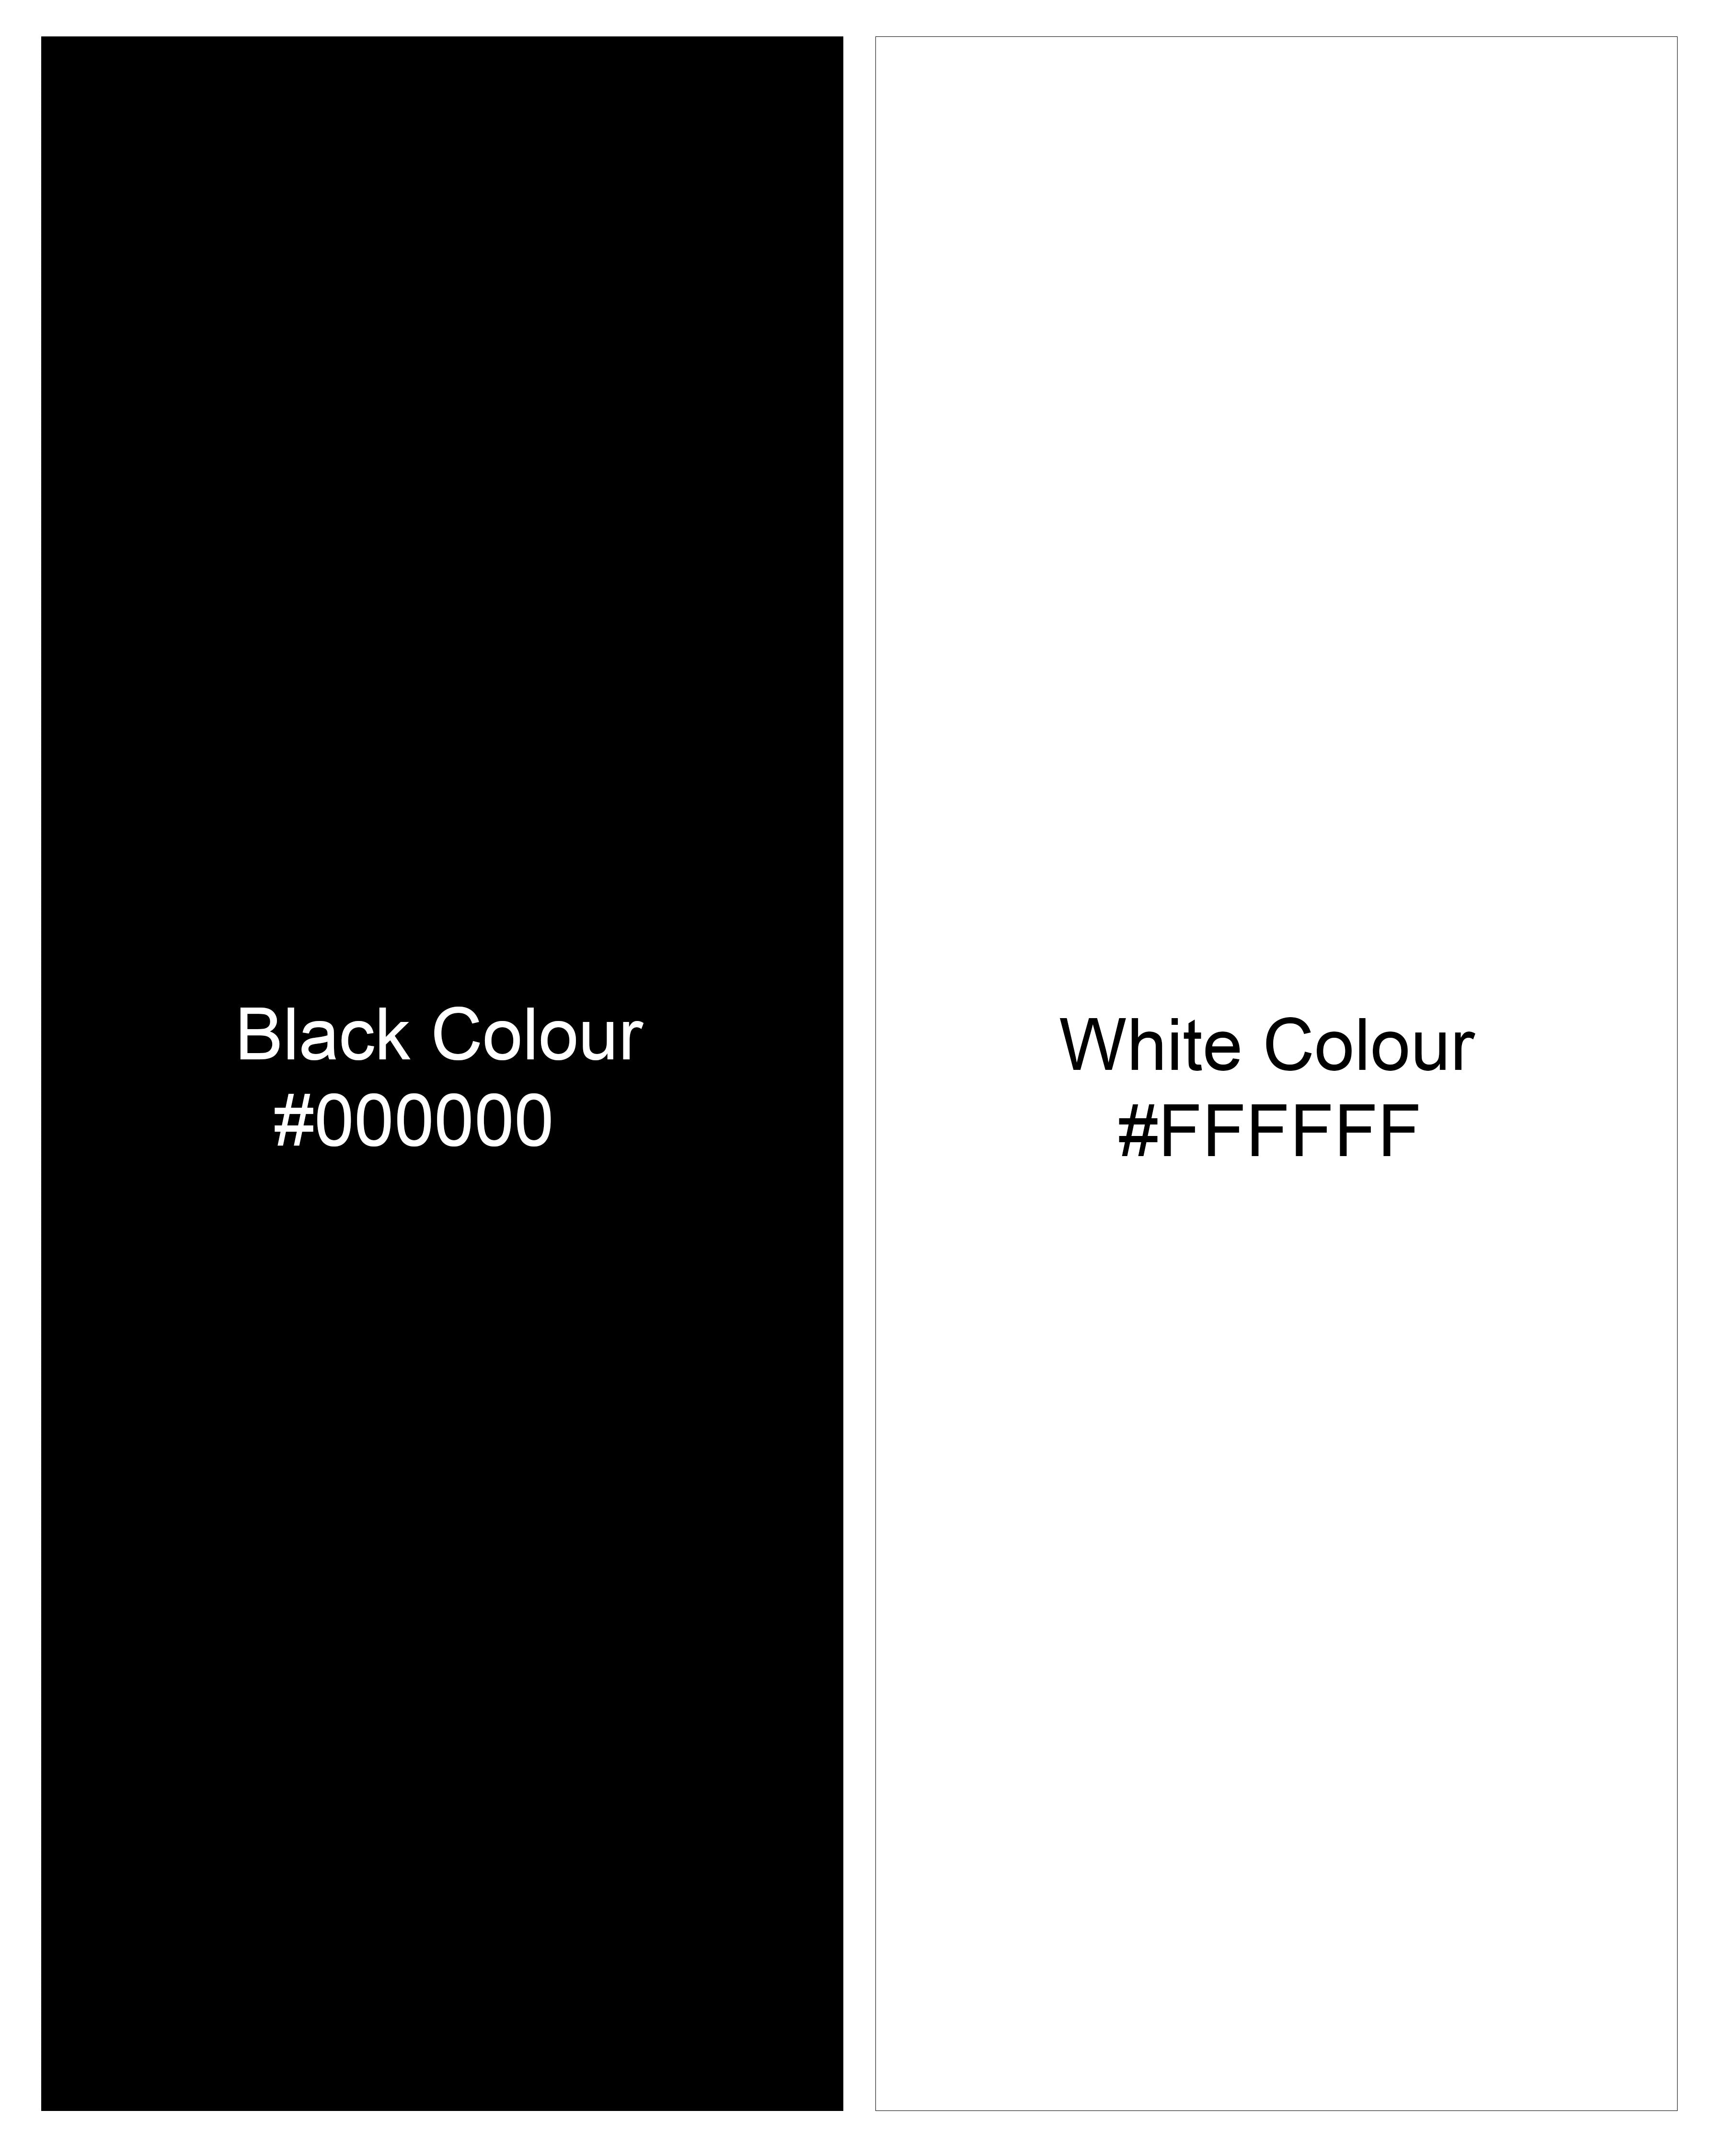 Jade Black and White Twill Plaid Premium Cotton Shirt 8744-BD-BLK-38, 8744-BD-BLK-H-38, 8744-BD-BLK-39, 8744-BD-BLK-H-39, 8744-BD-BLK-40, 8744-BD-BLK-H-40, 8744-BD-BLK-42, 8744-BD-BLK-H-42, 8744-BD-BLK-44, 8744-BD-BLK-H-44, 8744-BD-BLK-46, 8744-BD-BLK-H-46, 8744-BD-BLK-48, 8744-BD-BLK-H-48, 8744-BD-BLK-50, 8744-BD-BLK-H-50, 8744-BD-BLK-52, 8744-BD-BLK-H-52